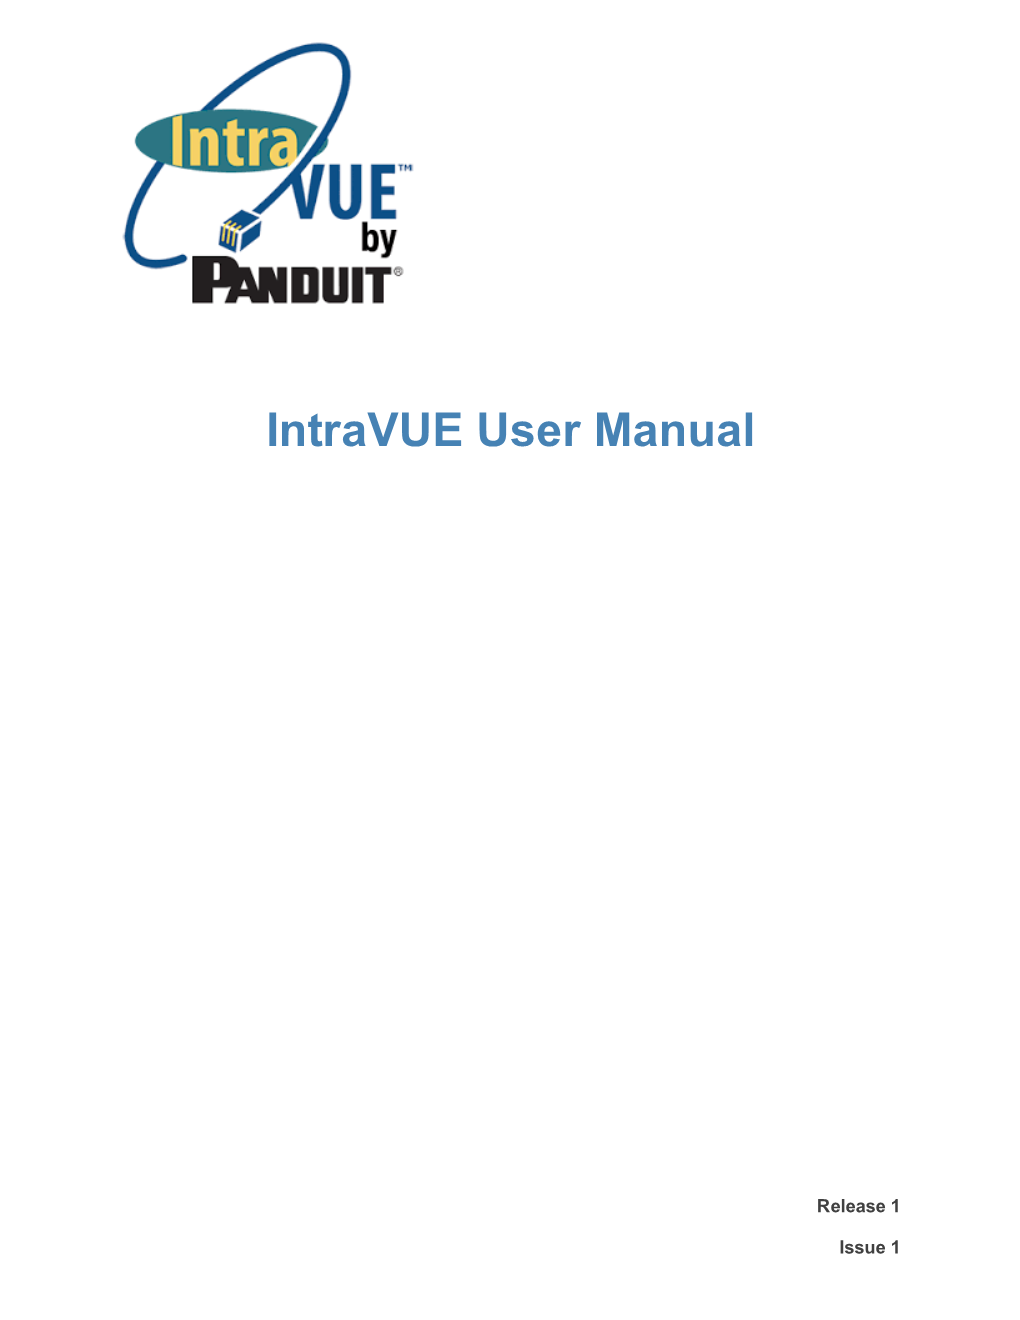 Intravue Help User Manual